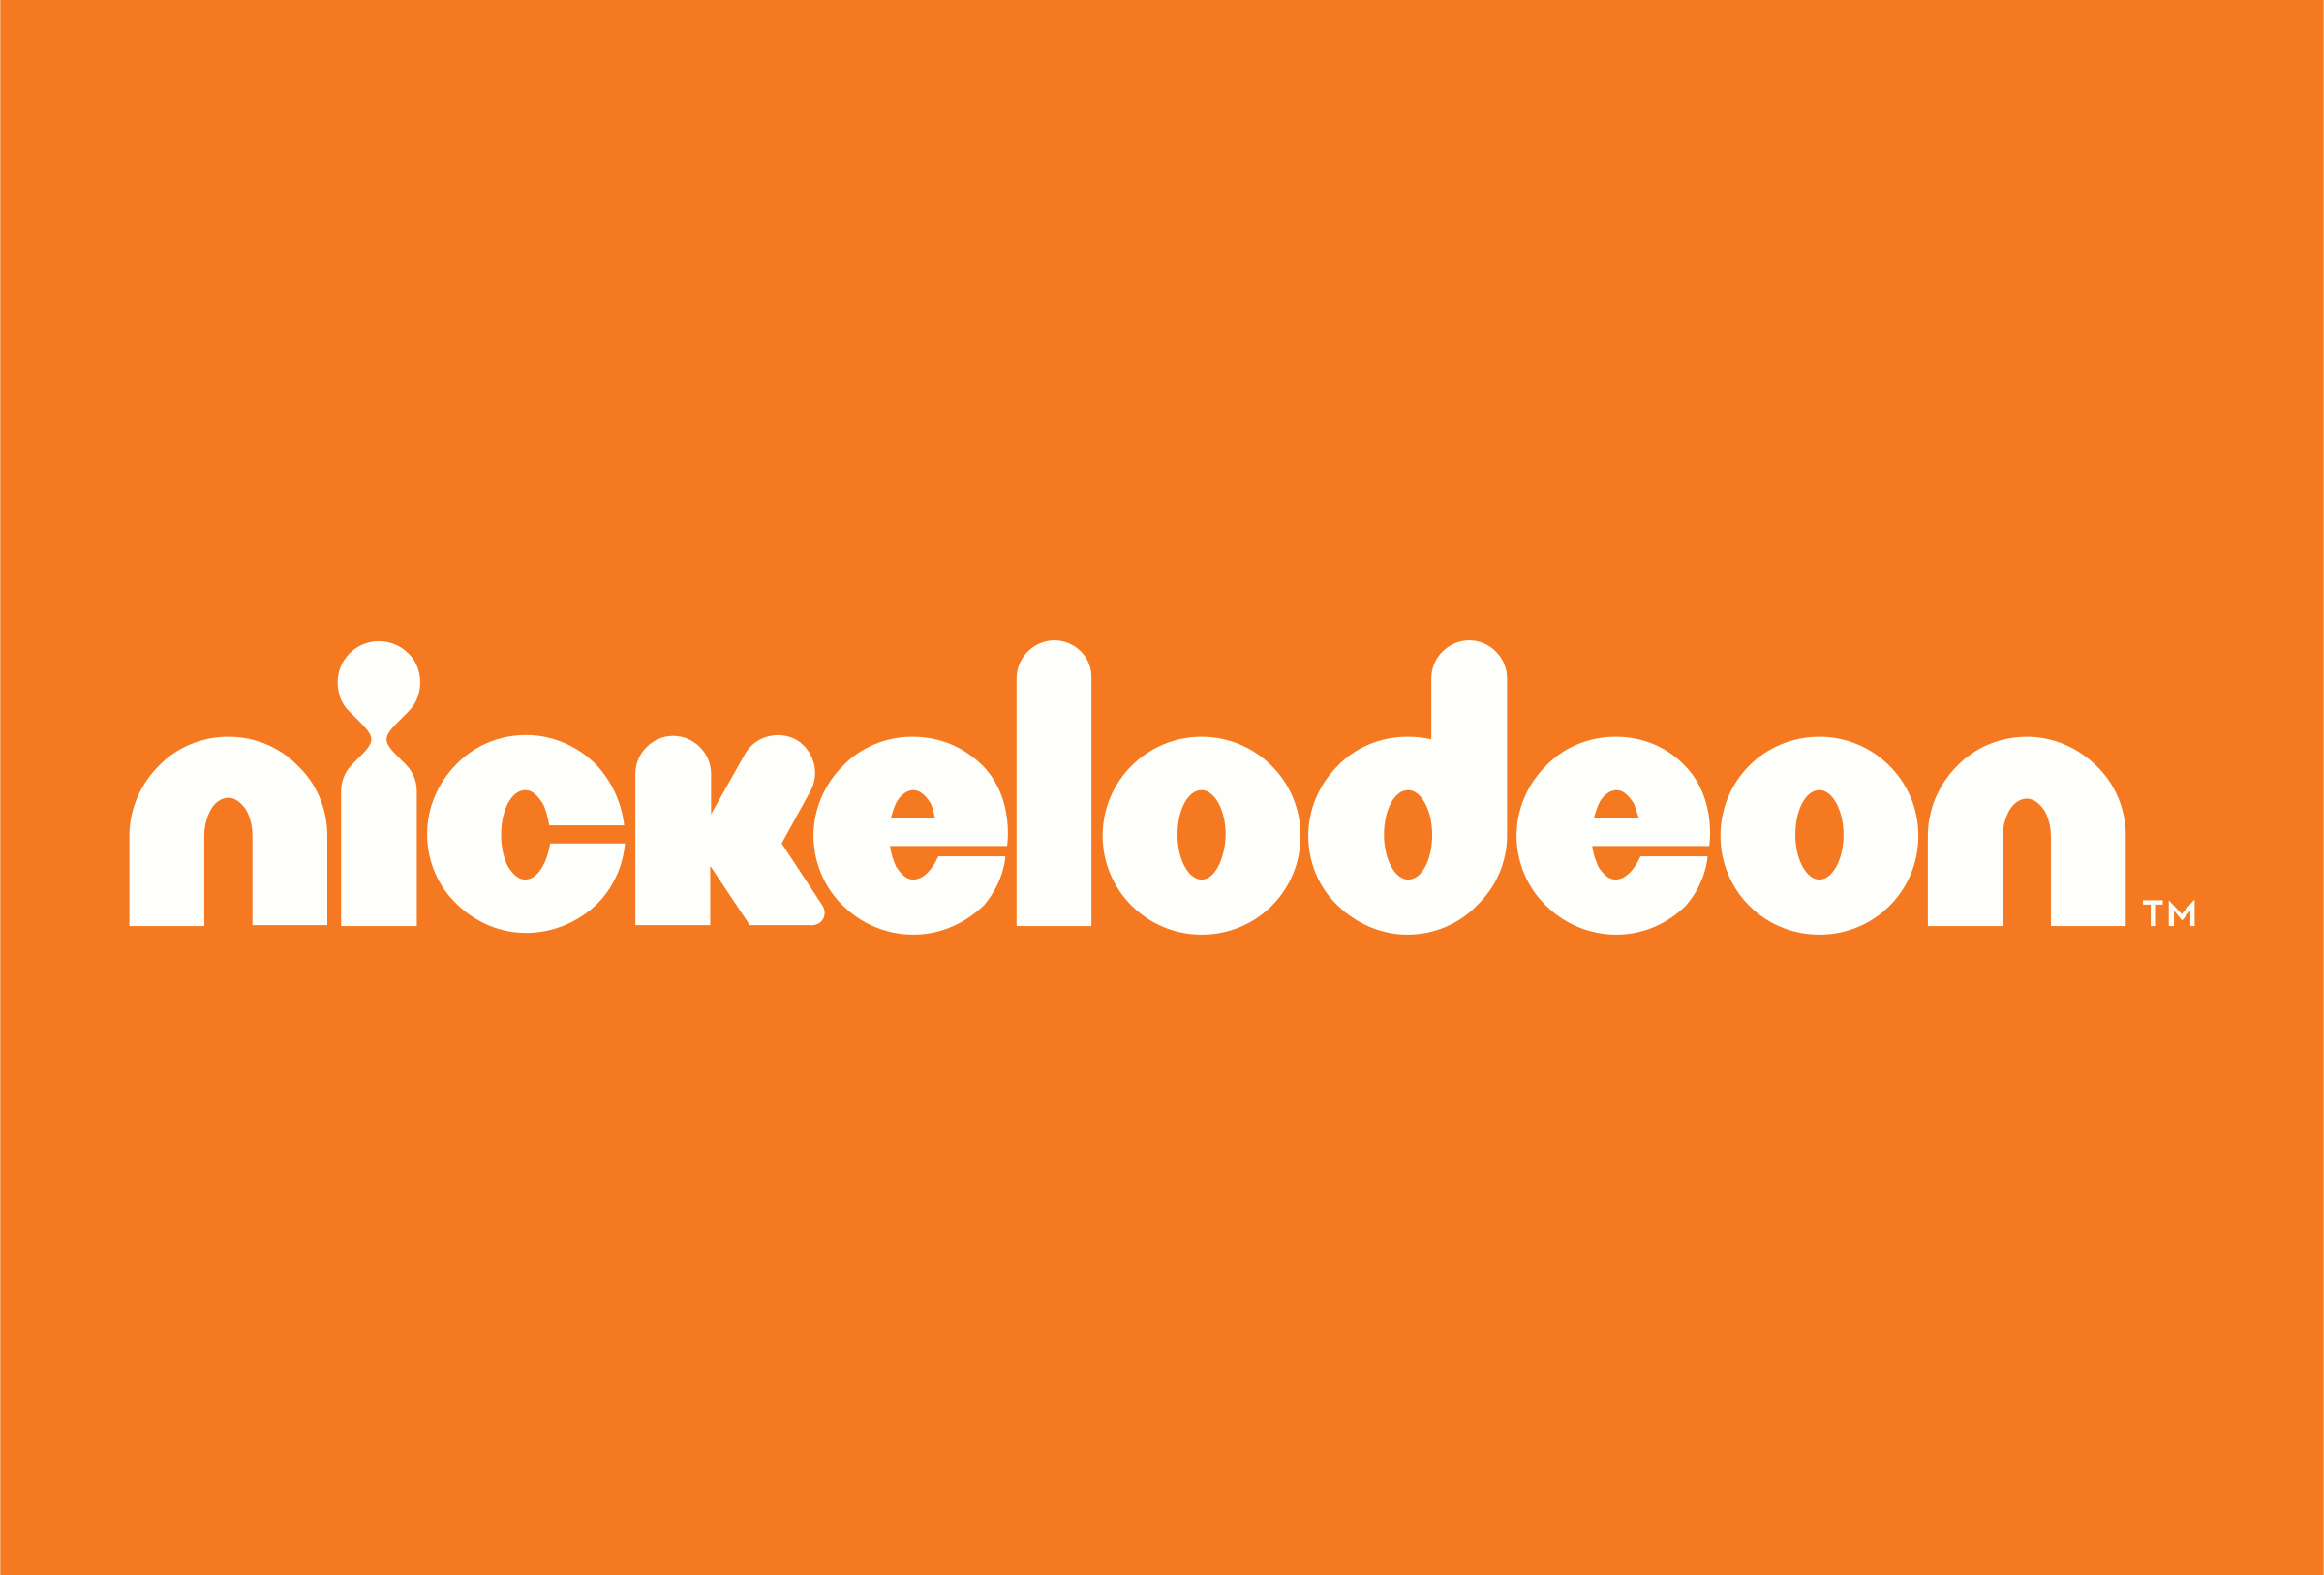 Nickeleodeon Logo - Nickelodeon Logo PNG Transparent & SVG Vector - Freebie Supply